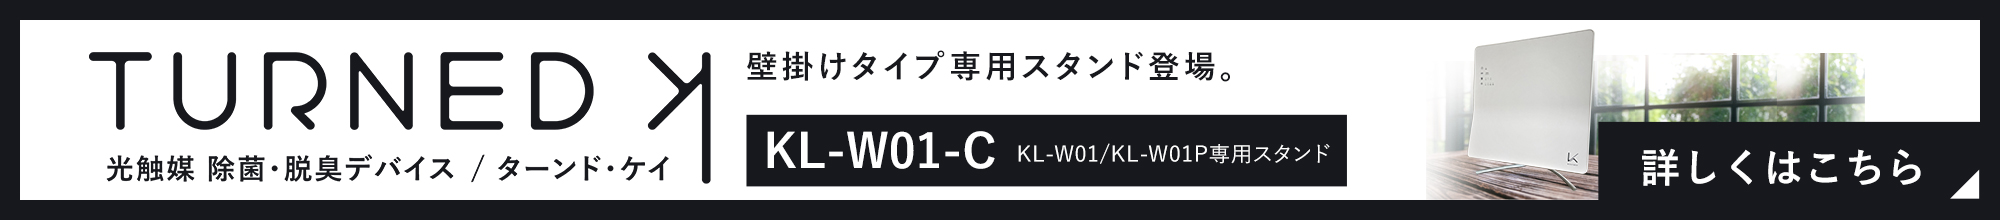 KL-W01 専用スタンド